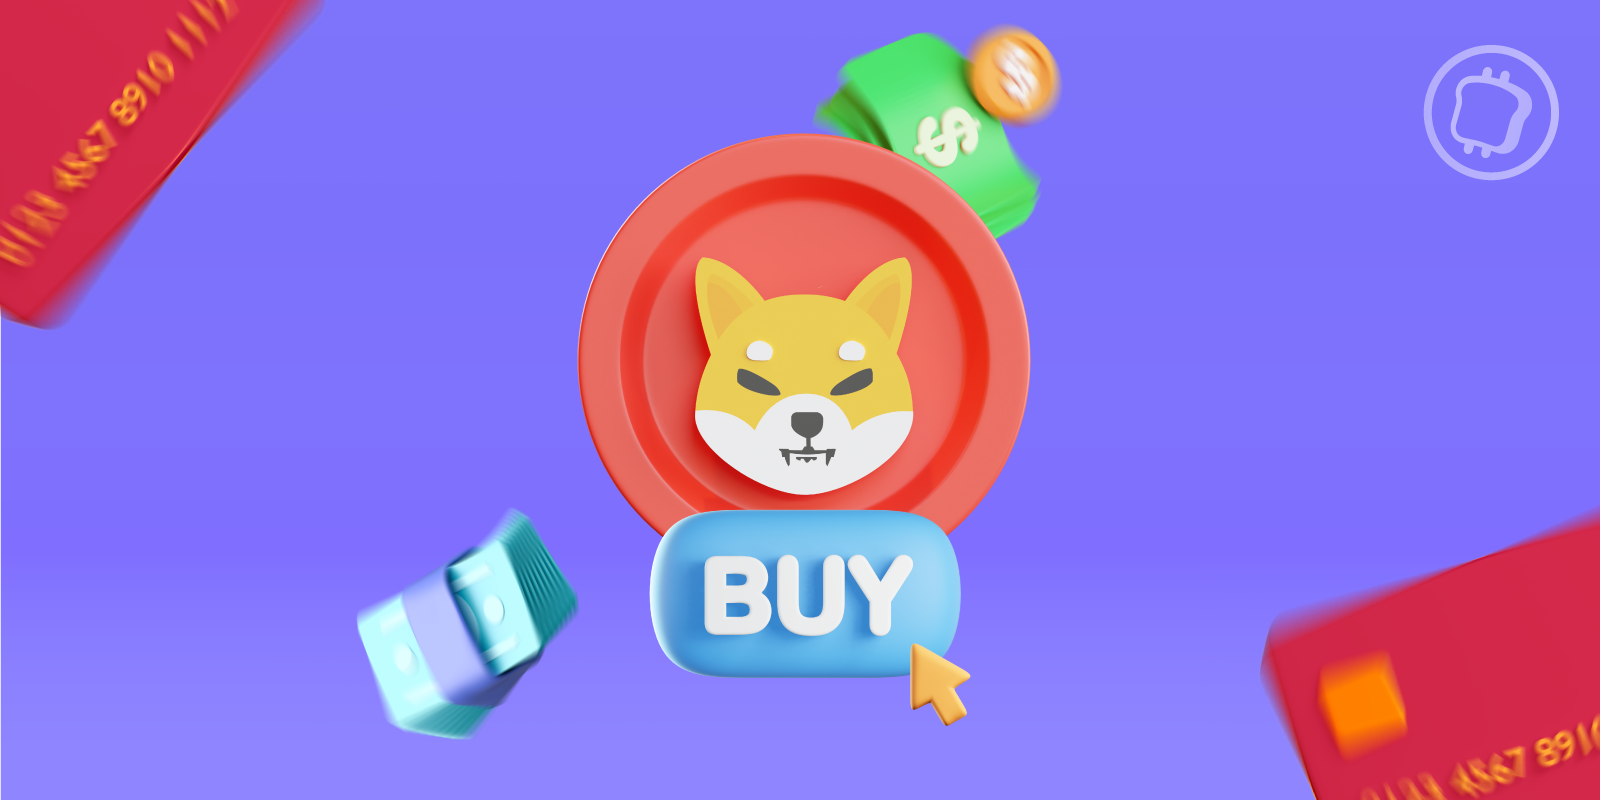 Acheter facilement Shiba Inu - SHIB - La cryptomonnaie concurrente du Dogecoin